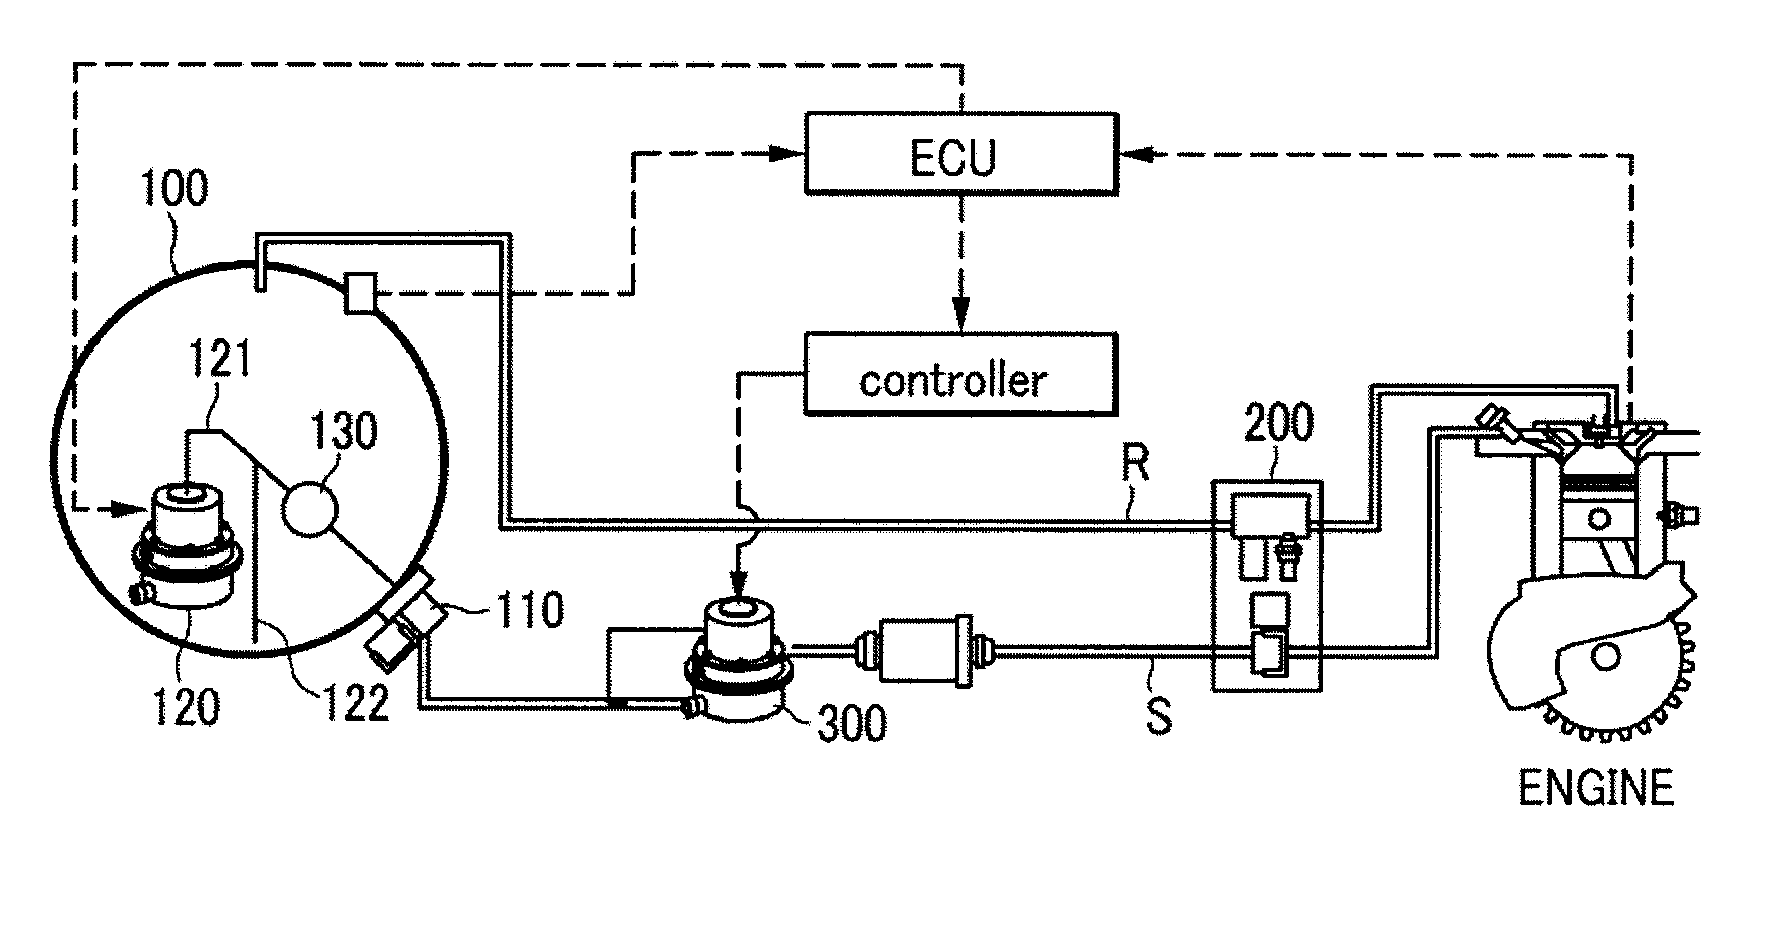 Fuel supplying system of lpi engine